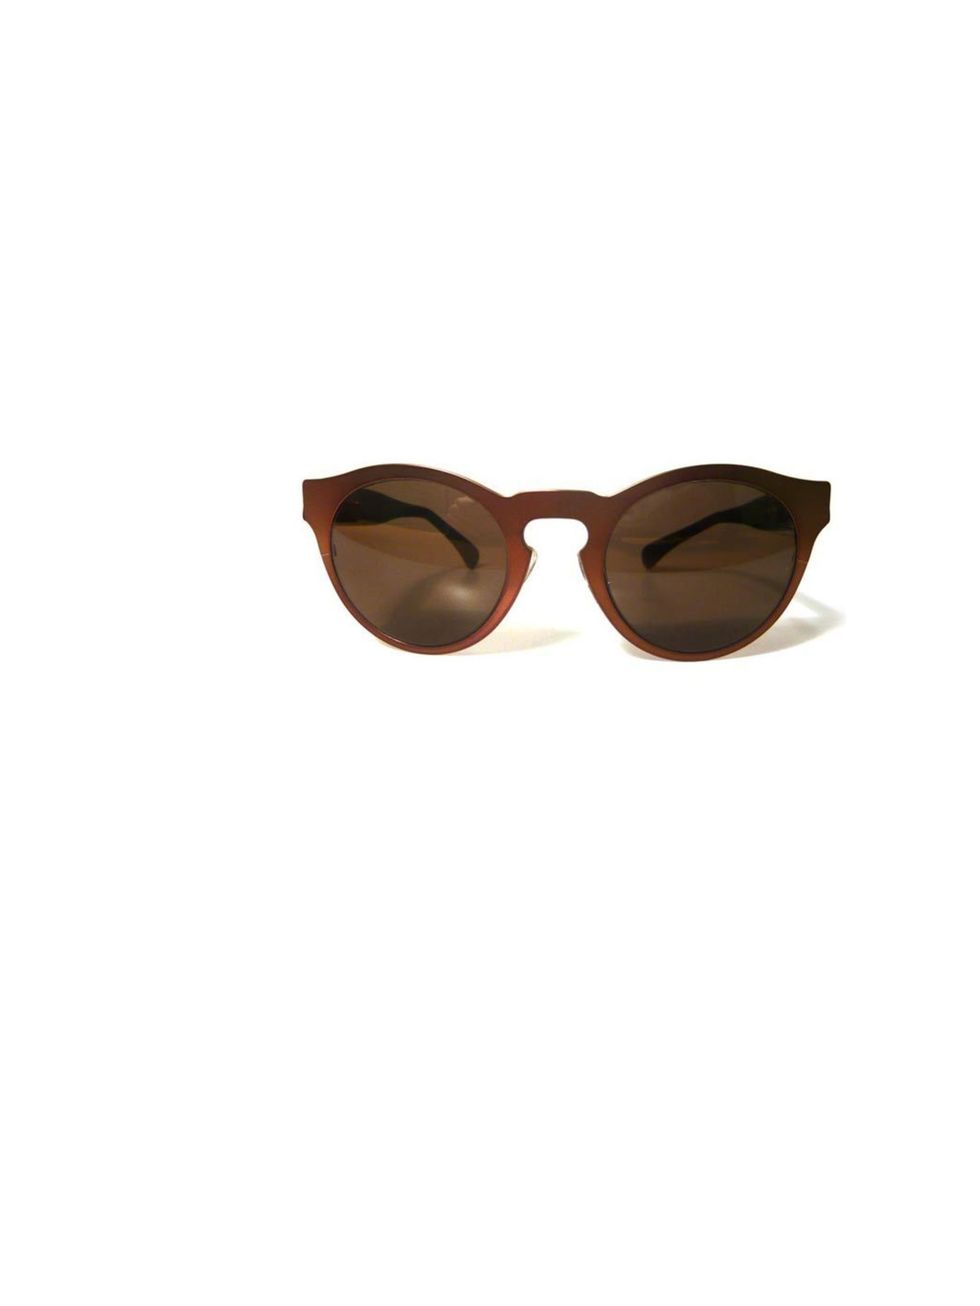 <p>Illesteva 'Beca' bronze sunglasses, £140, at <a href="http://www.triads.co.uk/triads-ladies-c3/accessories-c42/eyewear-c111/beca-bronze-sunglasses-p57050">Triads</a></p>